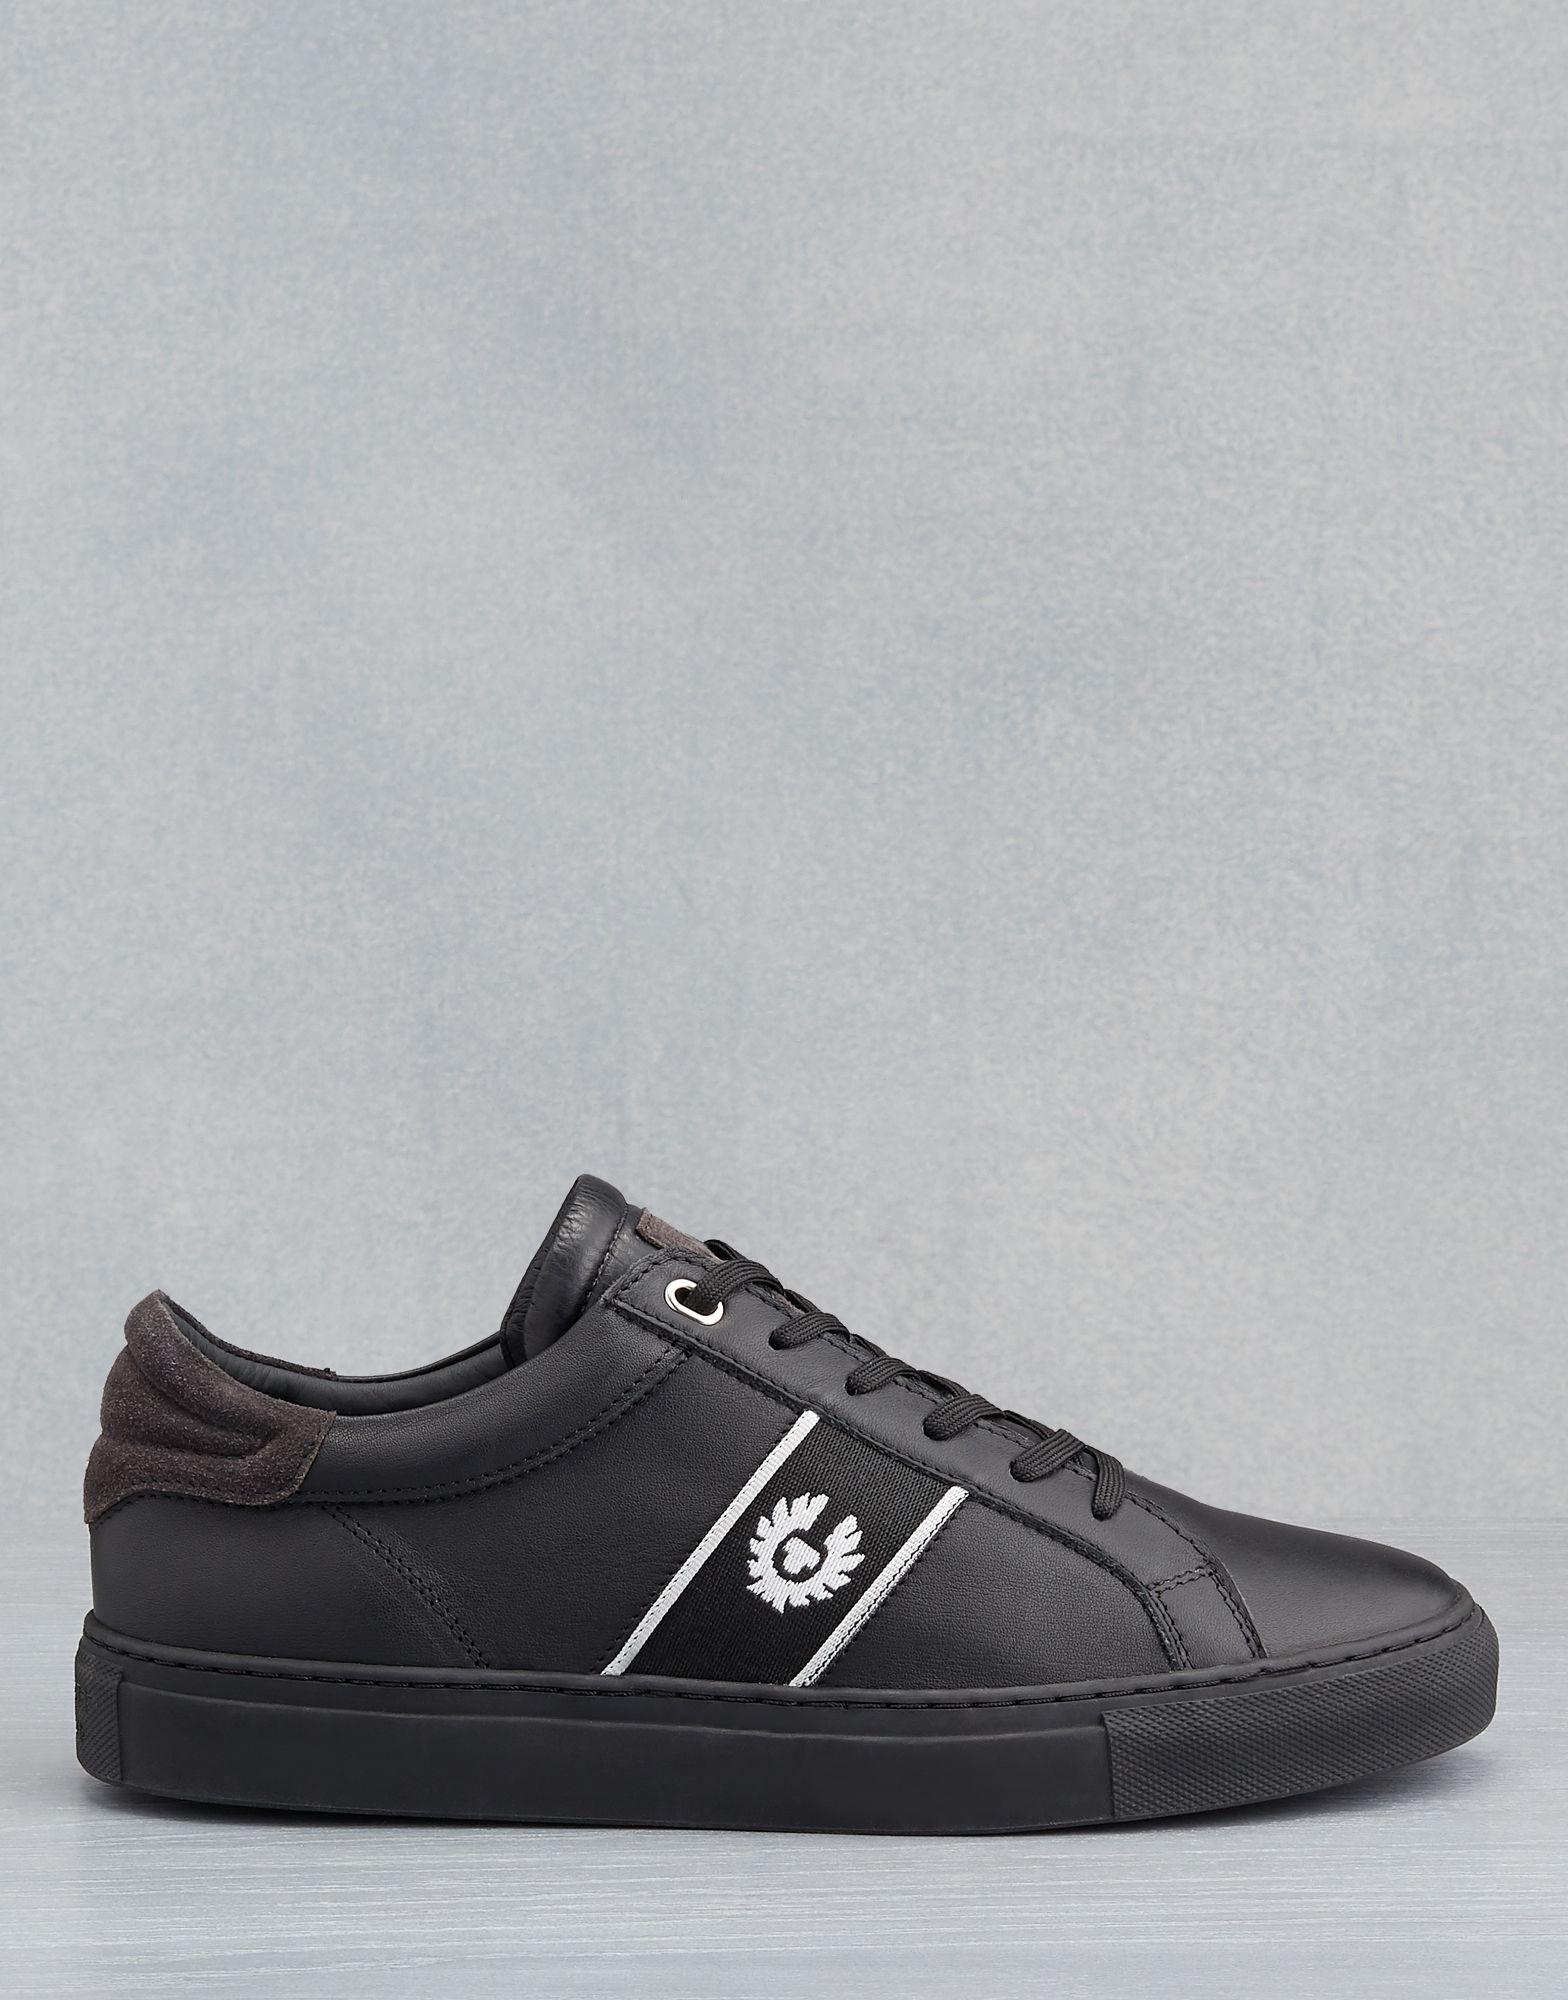 Belstaff Leather Dagenham Phoenix Sneakers in Black Graphite (Black) for  Men - Lyst